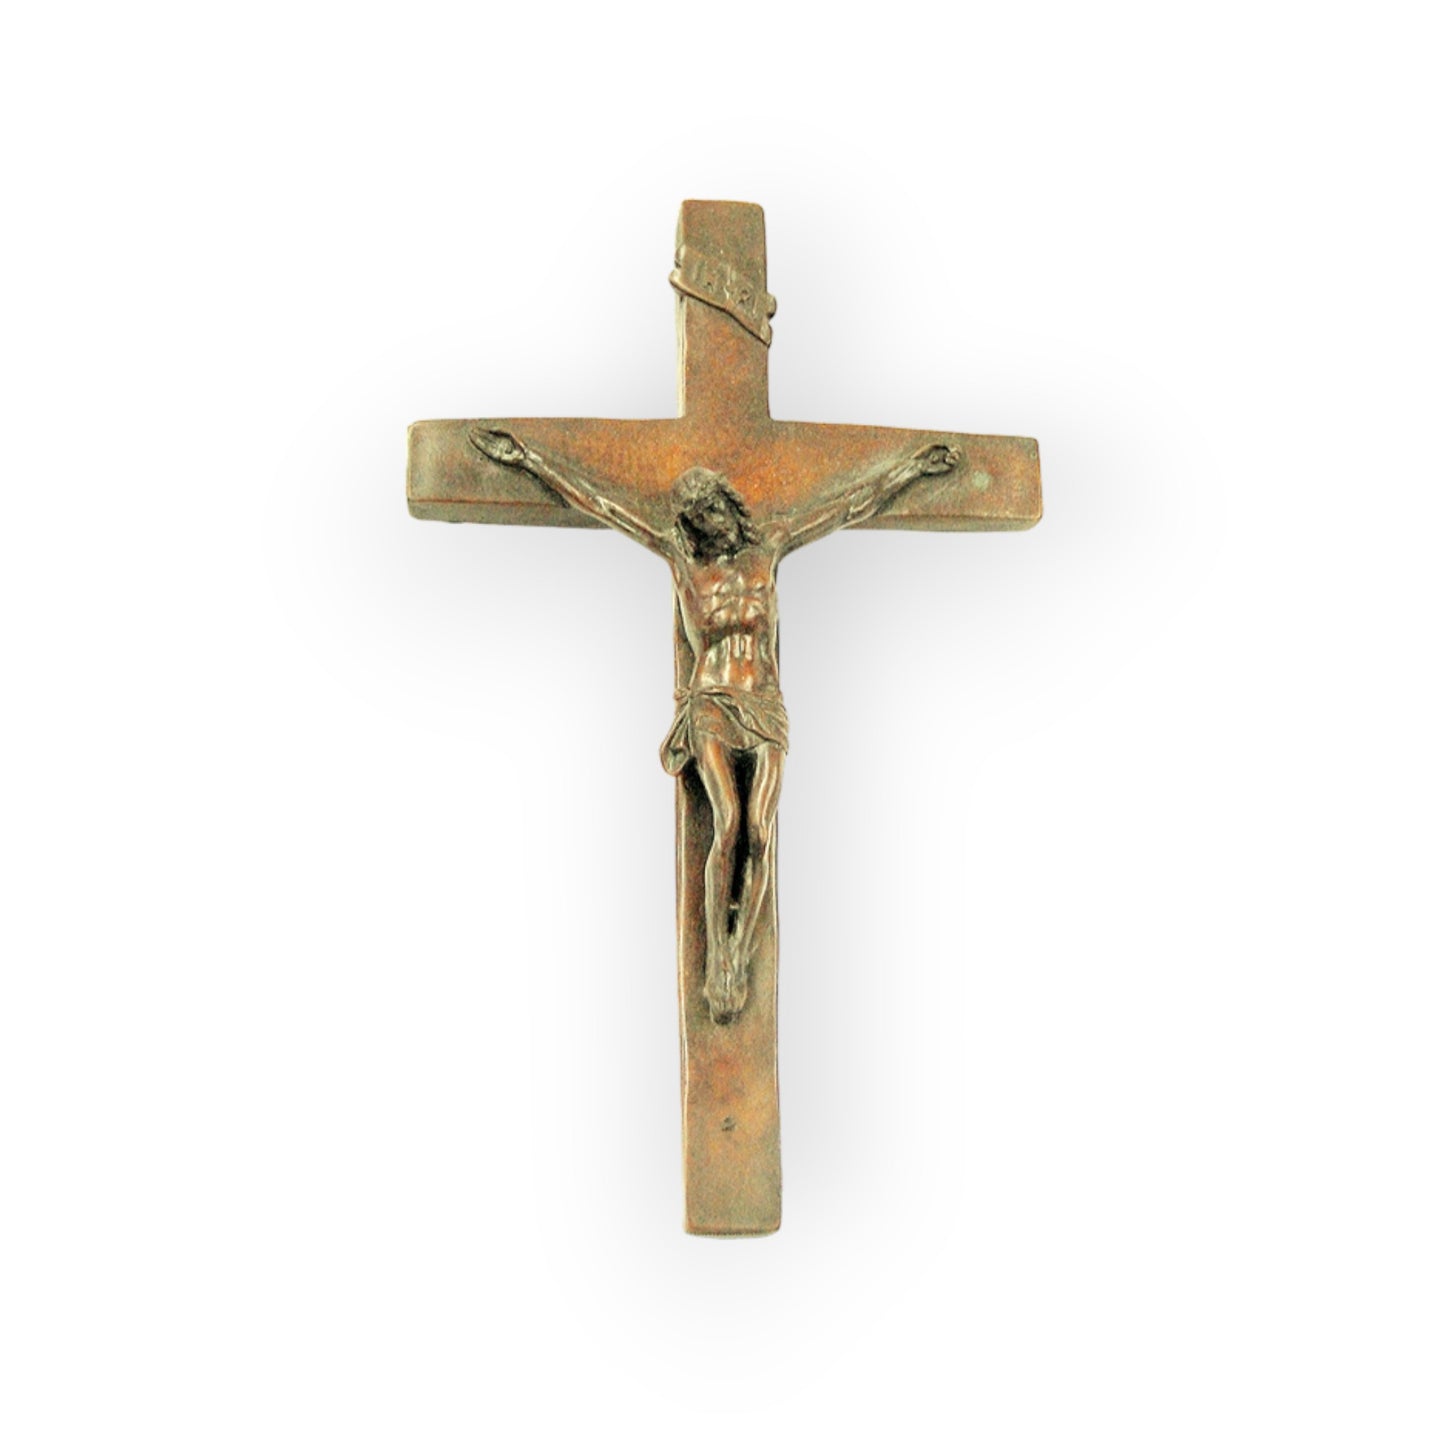 Cast Resin Crucifix of Jesus 10" Tall